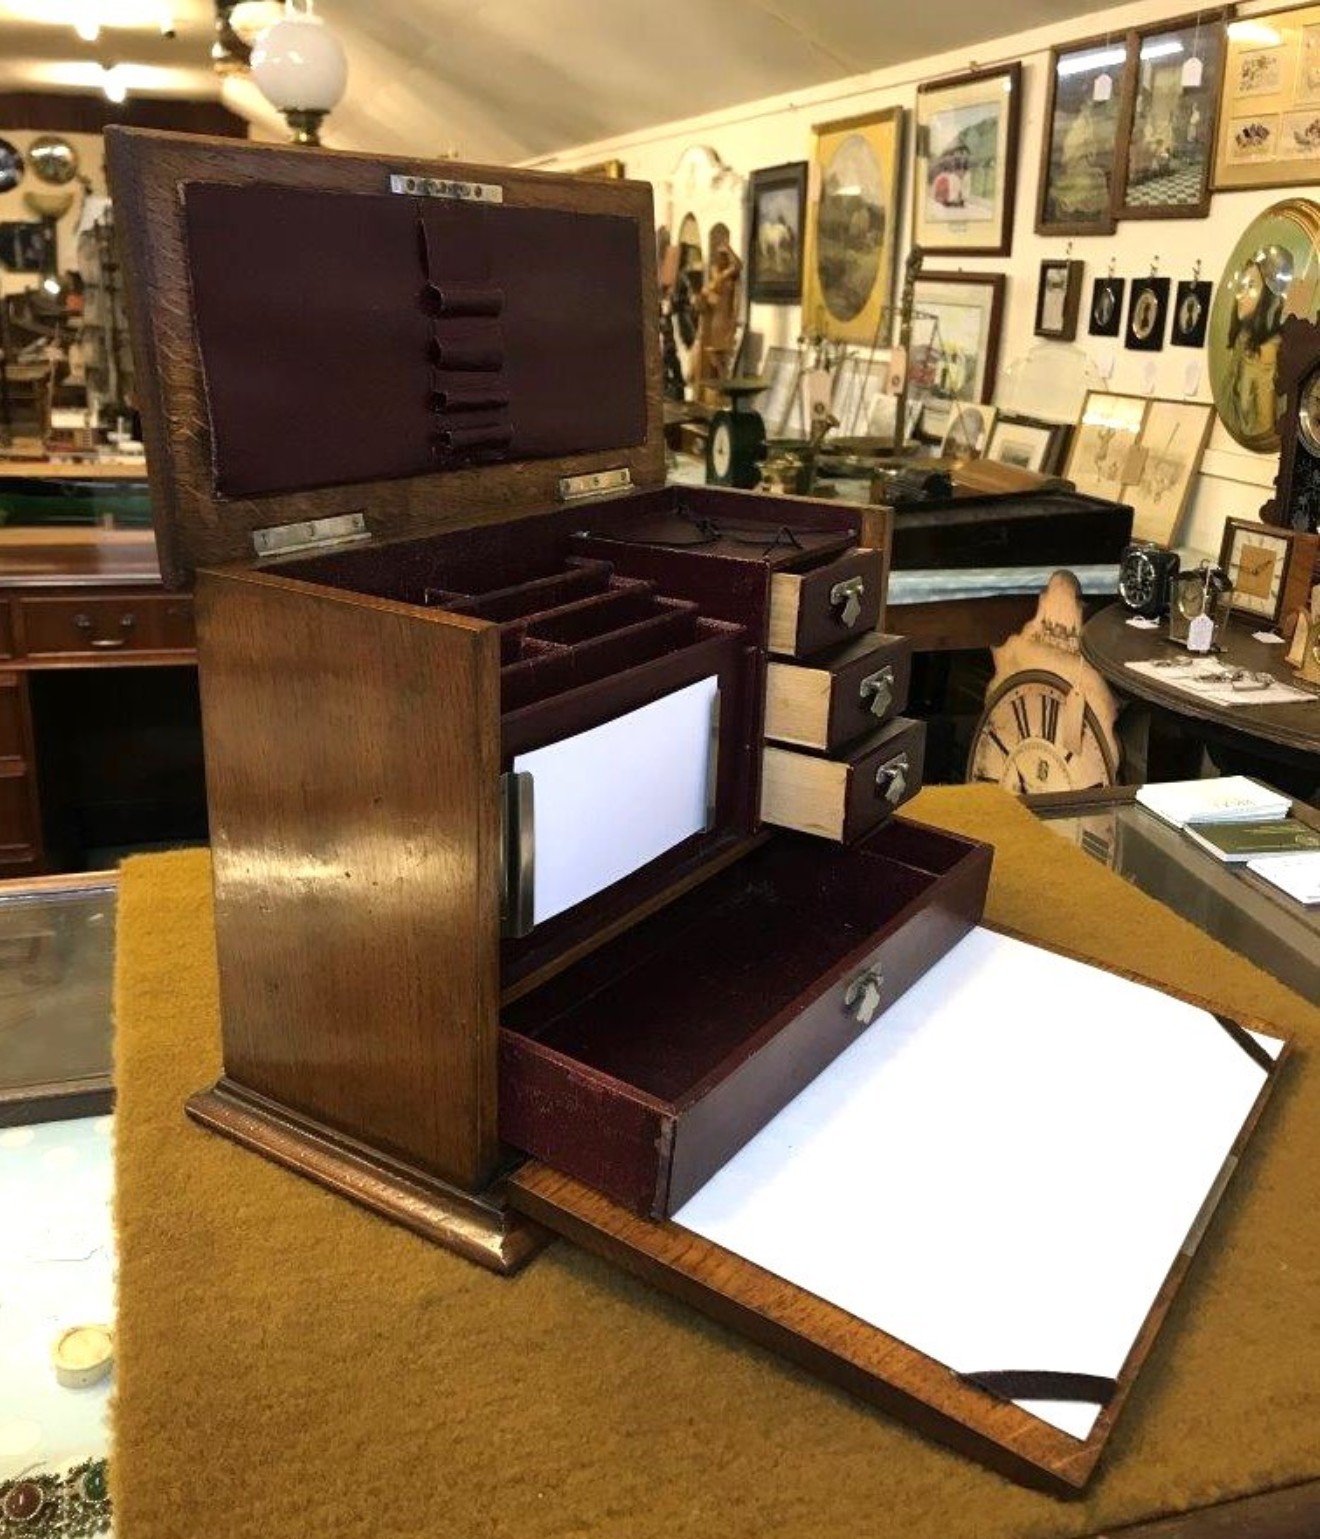 Edwardian Oak Fall Front Stationery Box / Writing Case